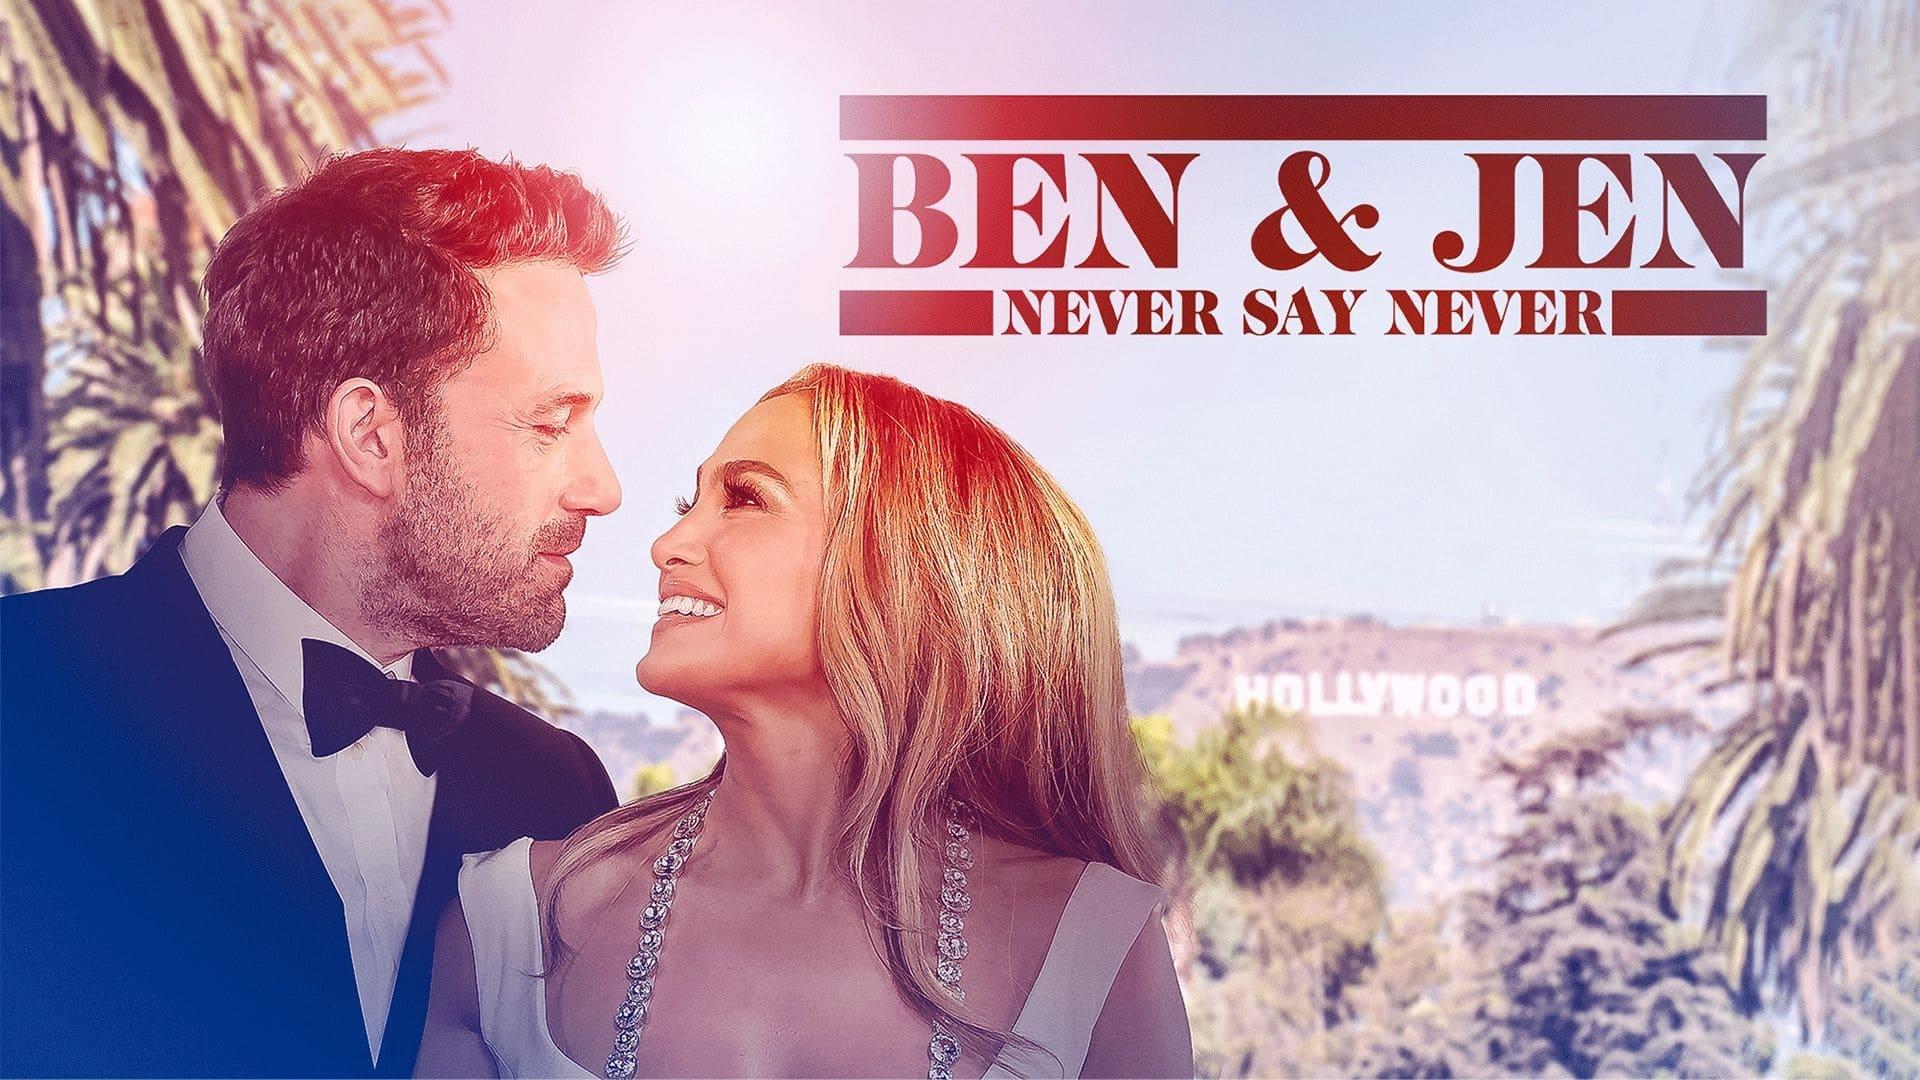 Ben Affleck & Jennifer Lopez: Never Say Never backdrop